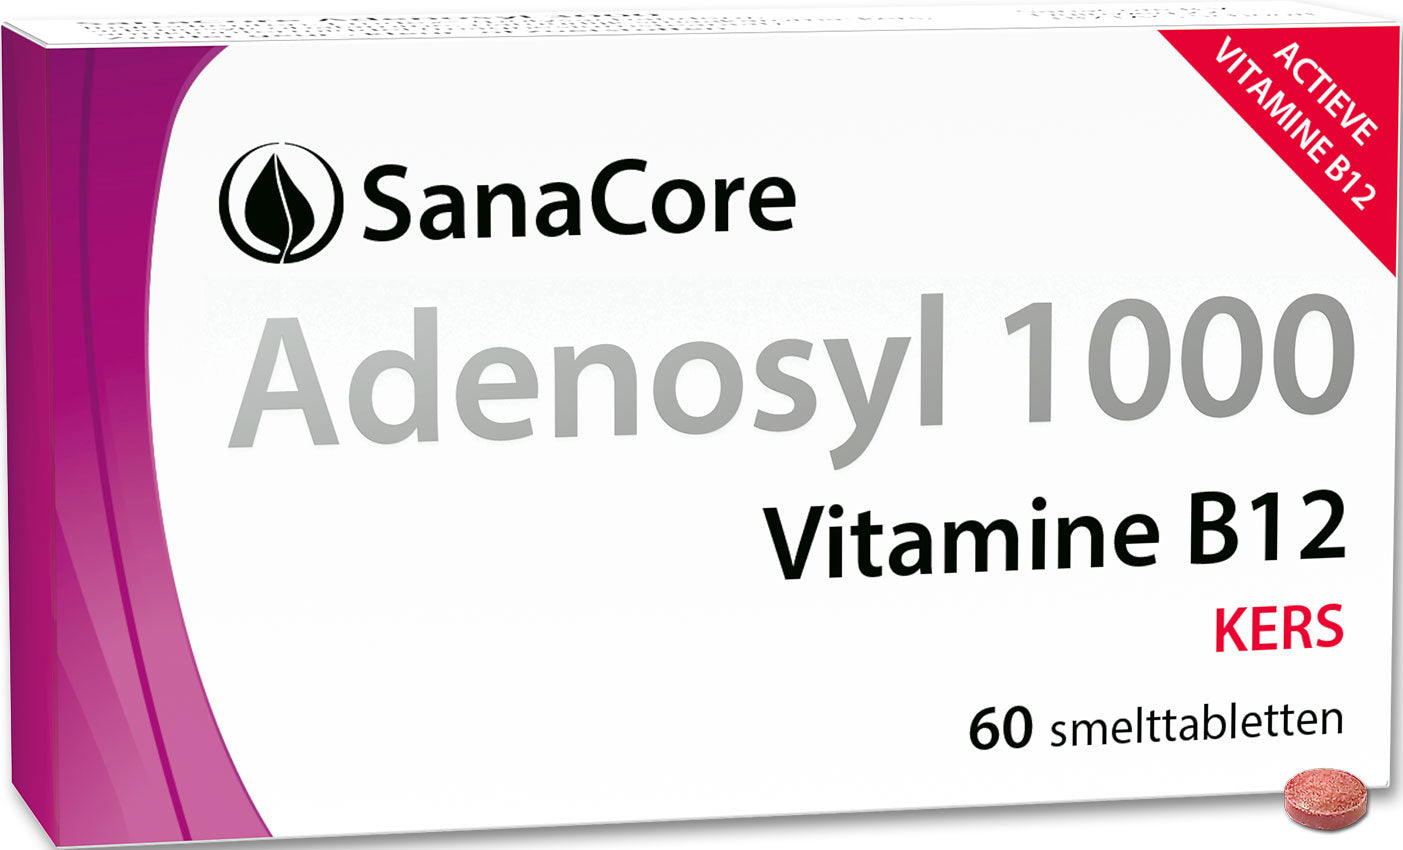 SanaCore Adenosyl 1000 Vitamine B12  (zonder foliumzuur)